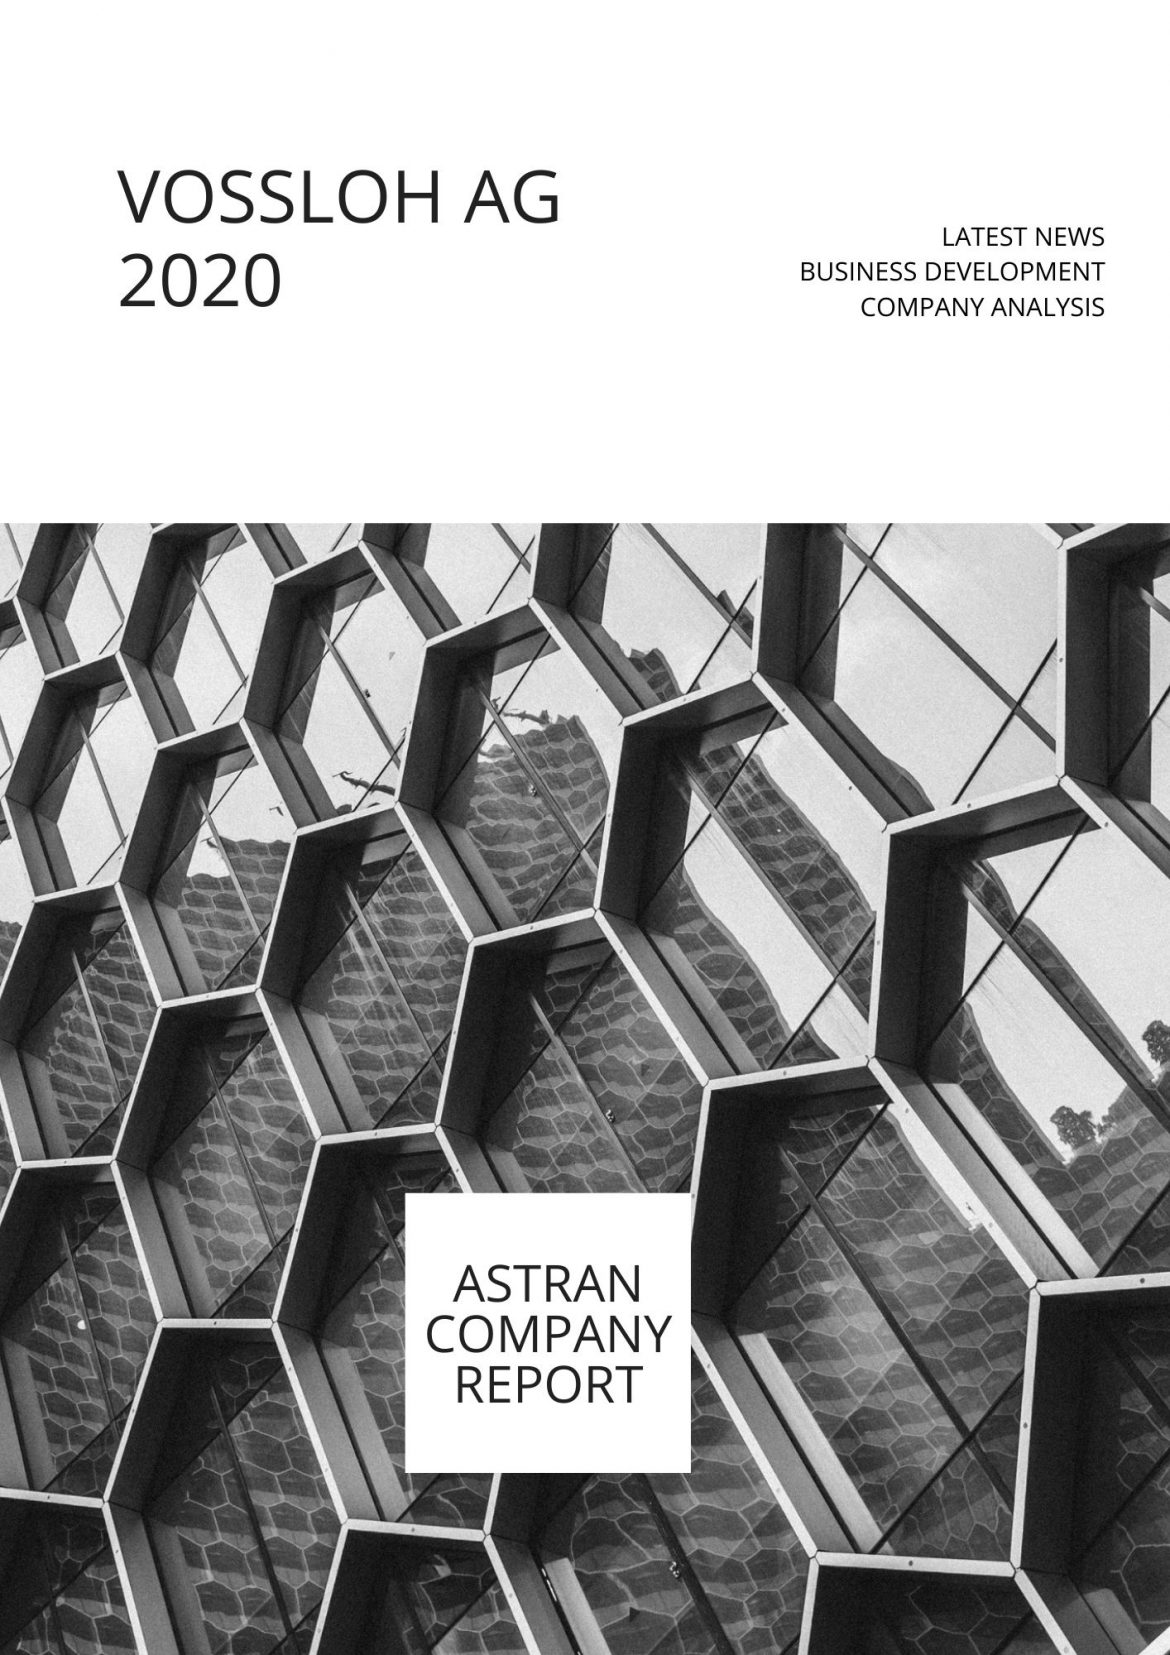 Company Report & Profile Vossloh AG 2020